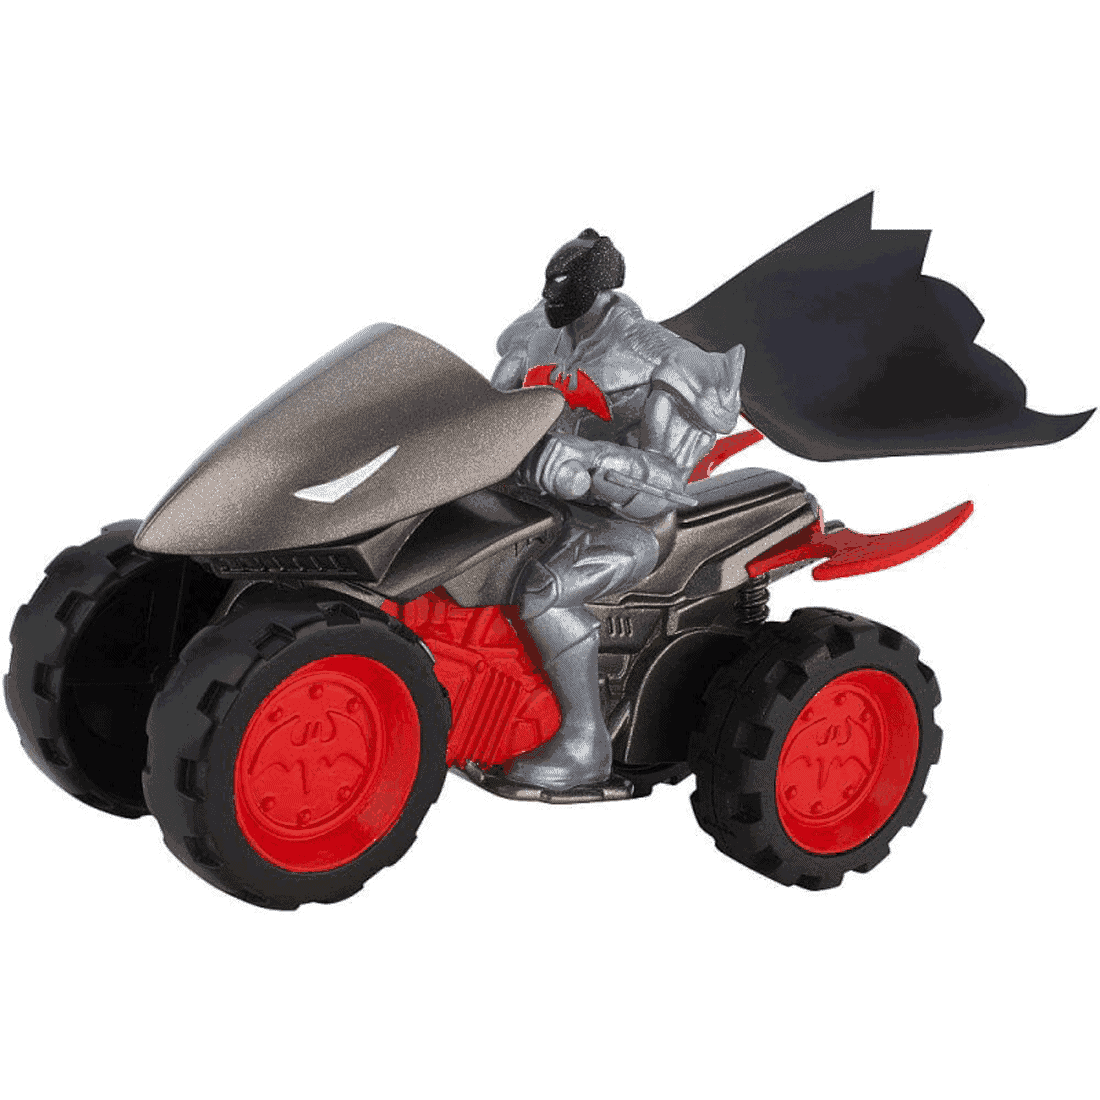 Batman Core Όχημα Με Μηχανισμό Προώθησης Και Όπλα - Γουρούνα